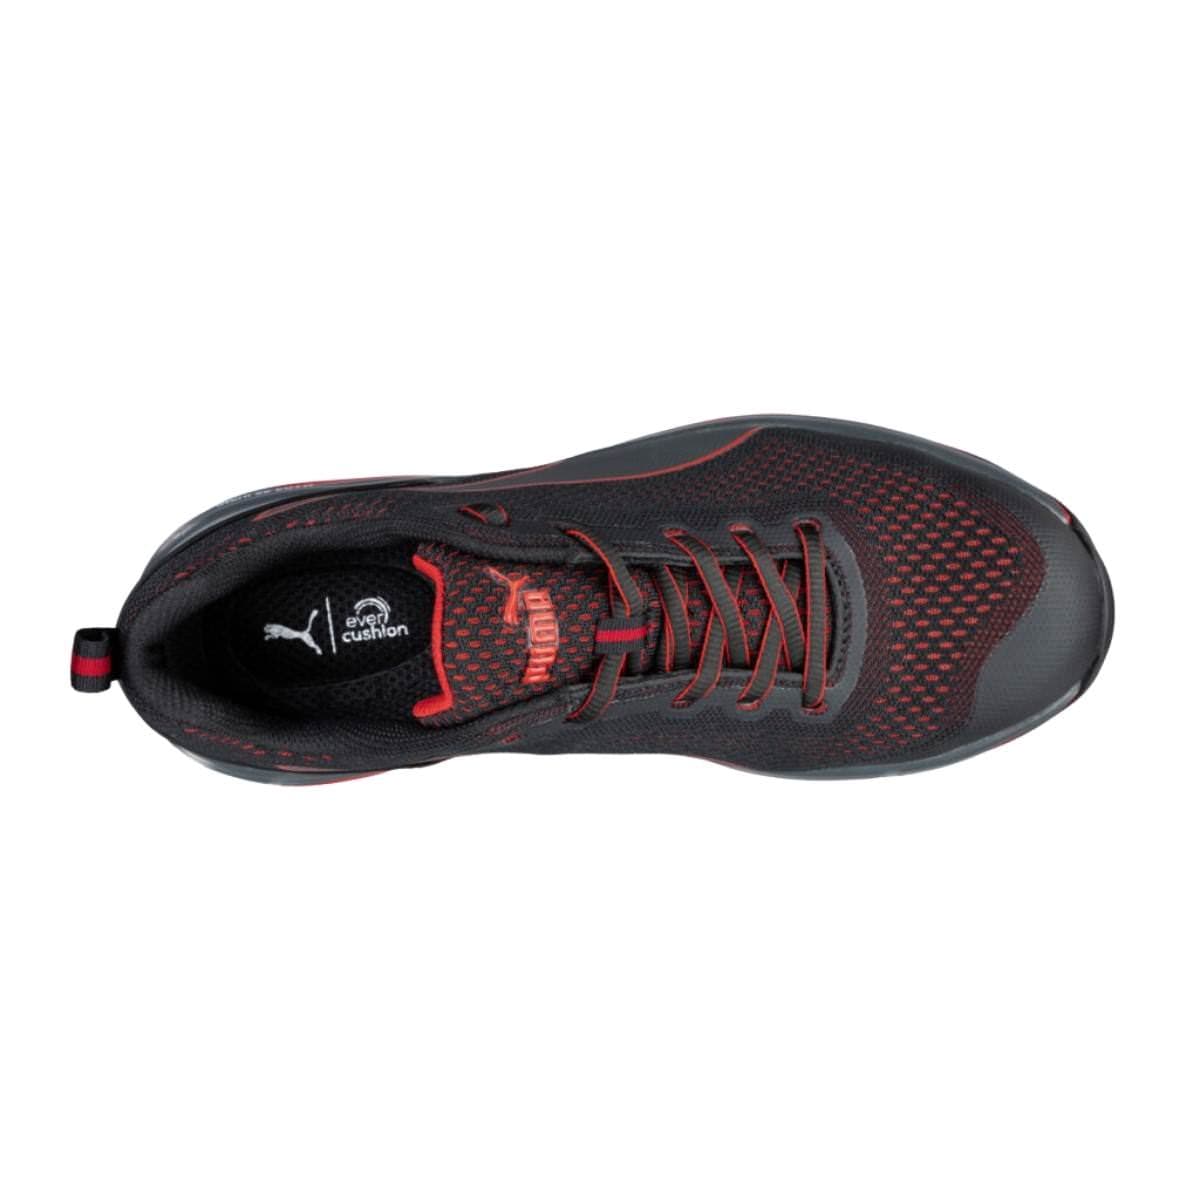 Puma Speed Safety Shoe Black/Red 644497